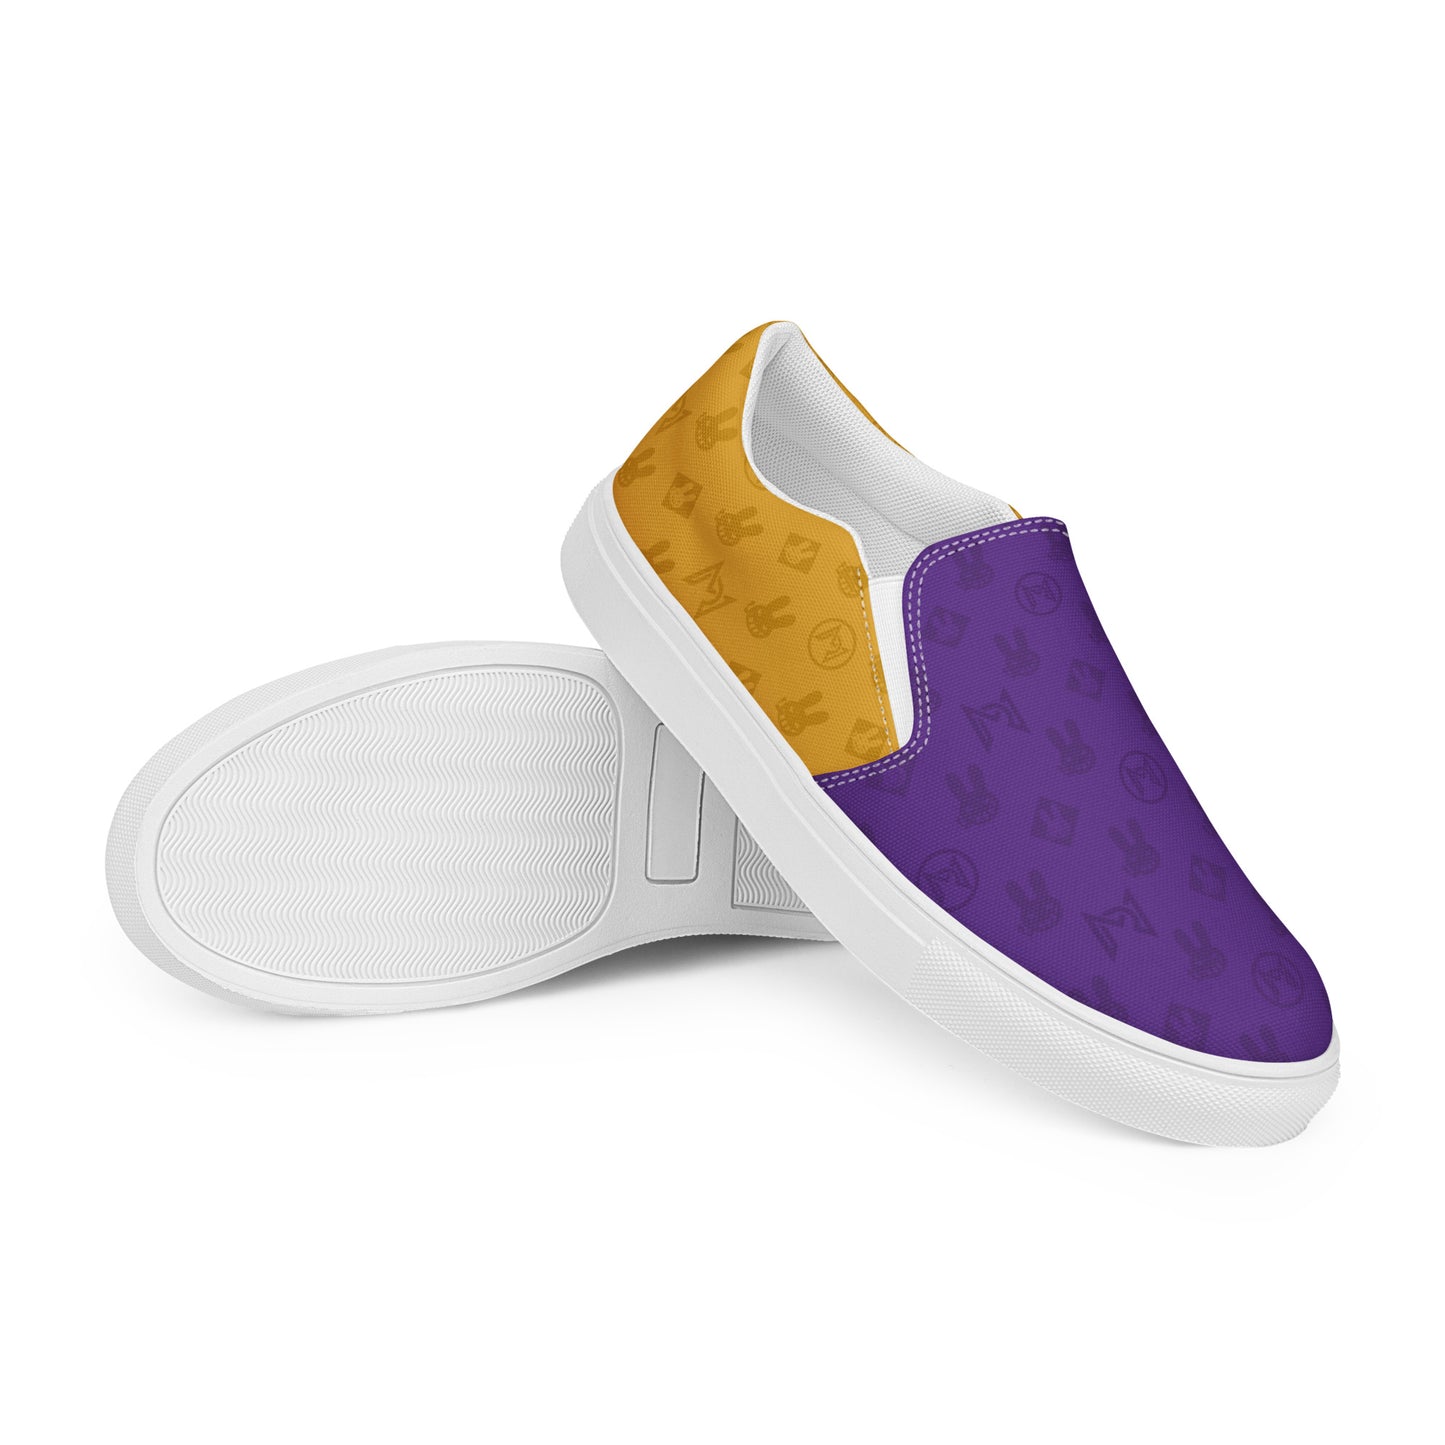 Dr. Zodiak's Moonrock - Lakers Slip-On Canvas Shoes